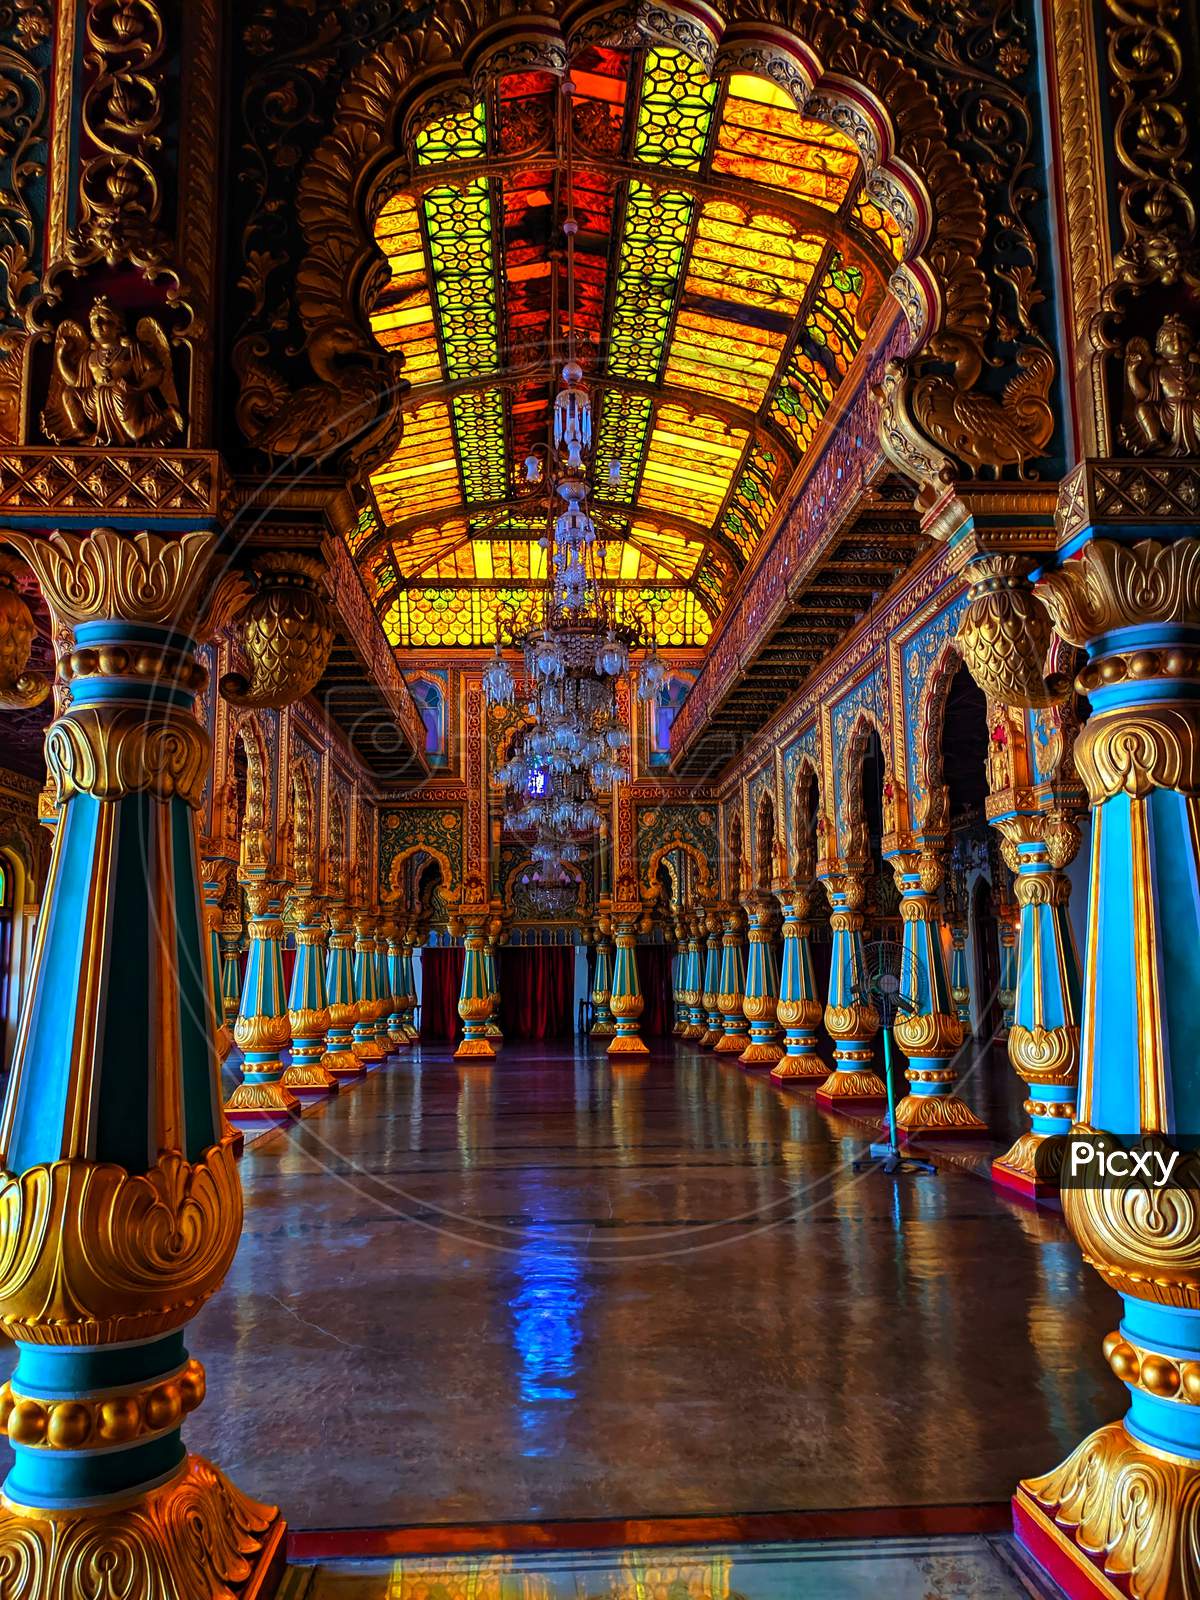 Architecture mysore palace